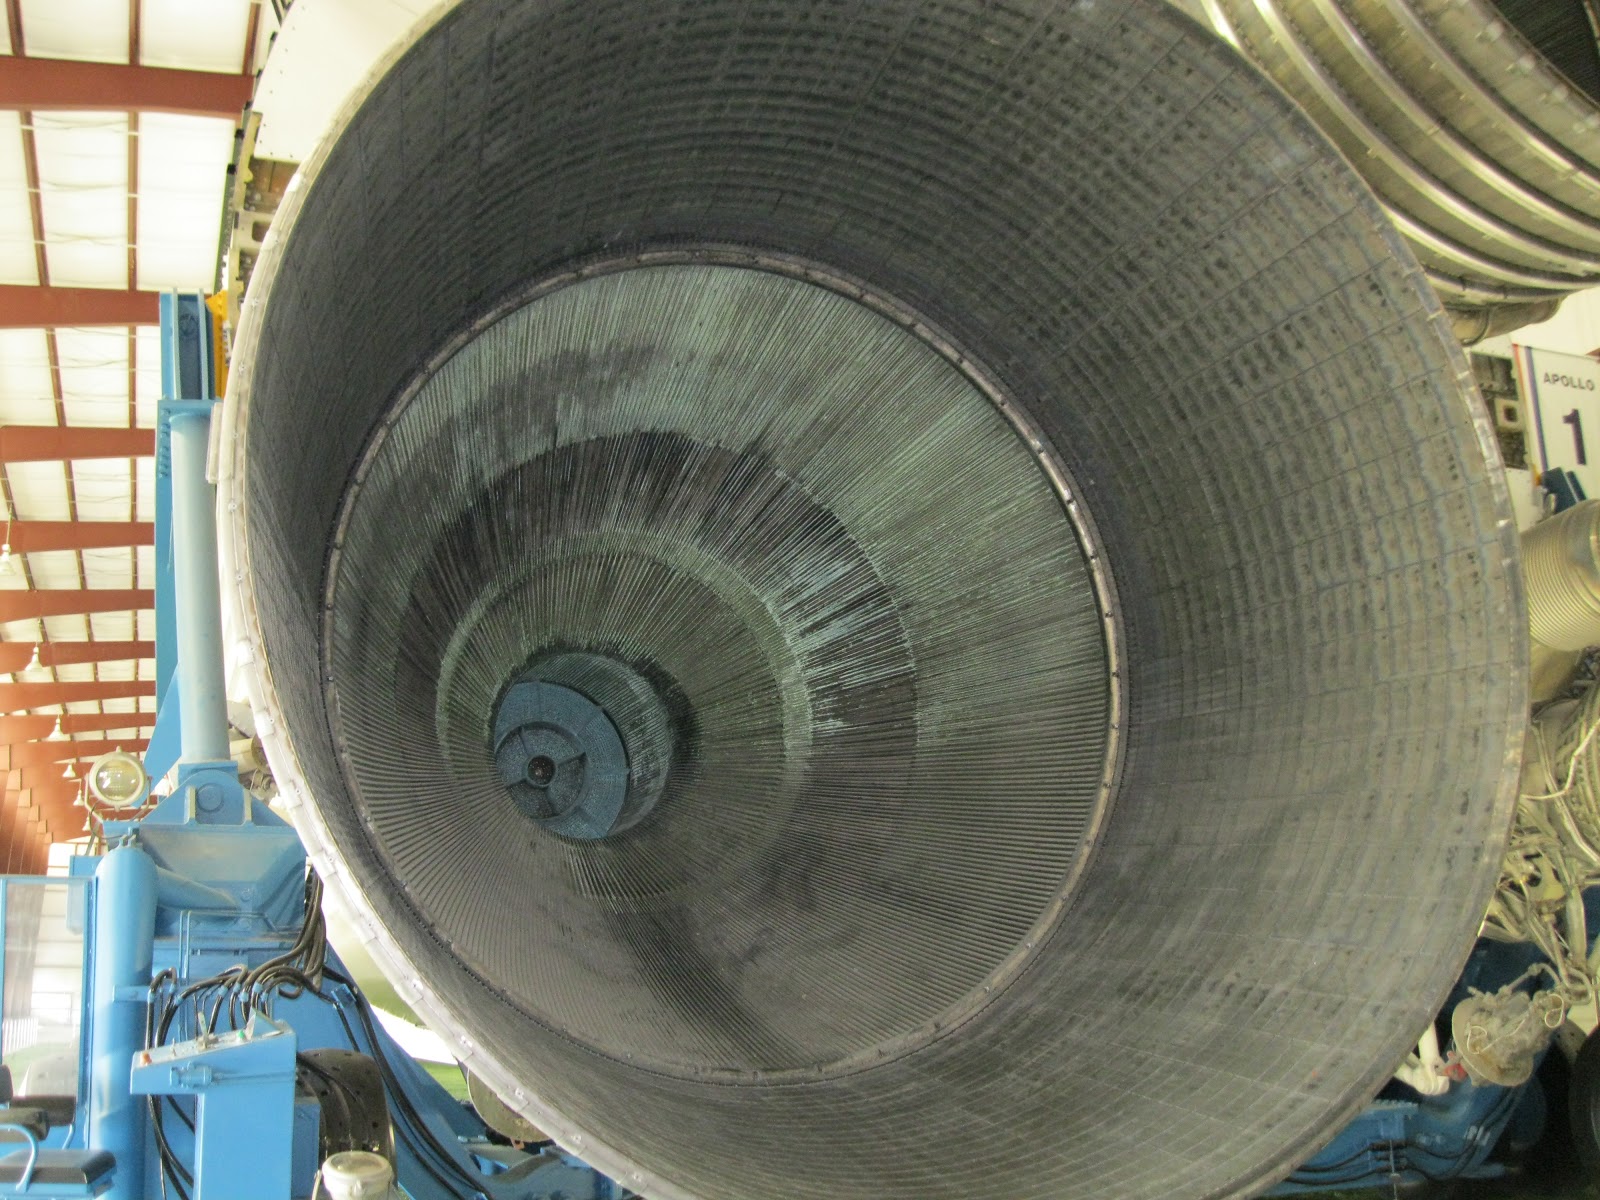 f-1 rocket engine